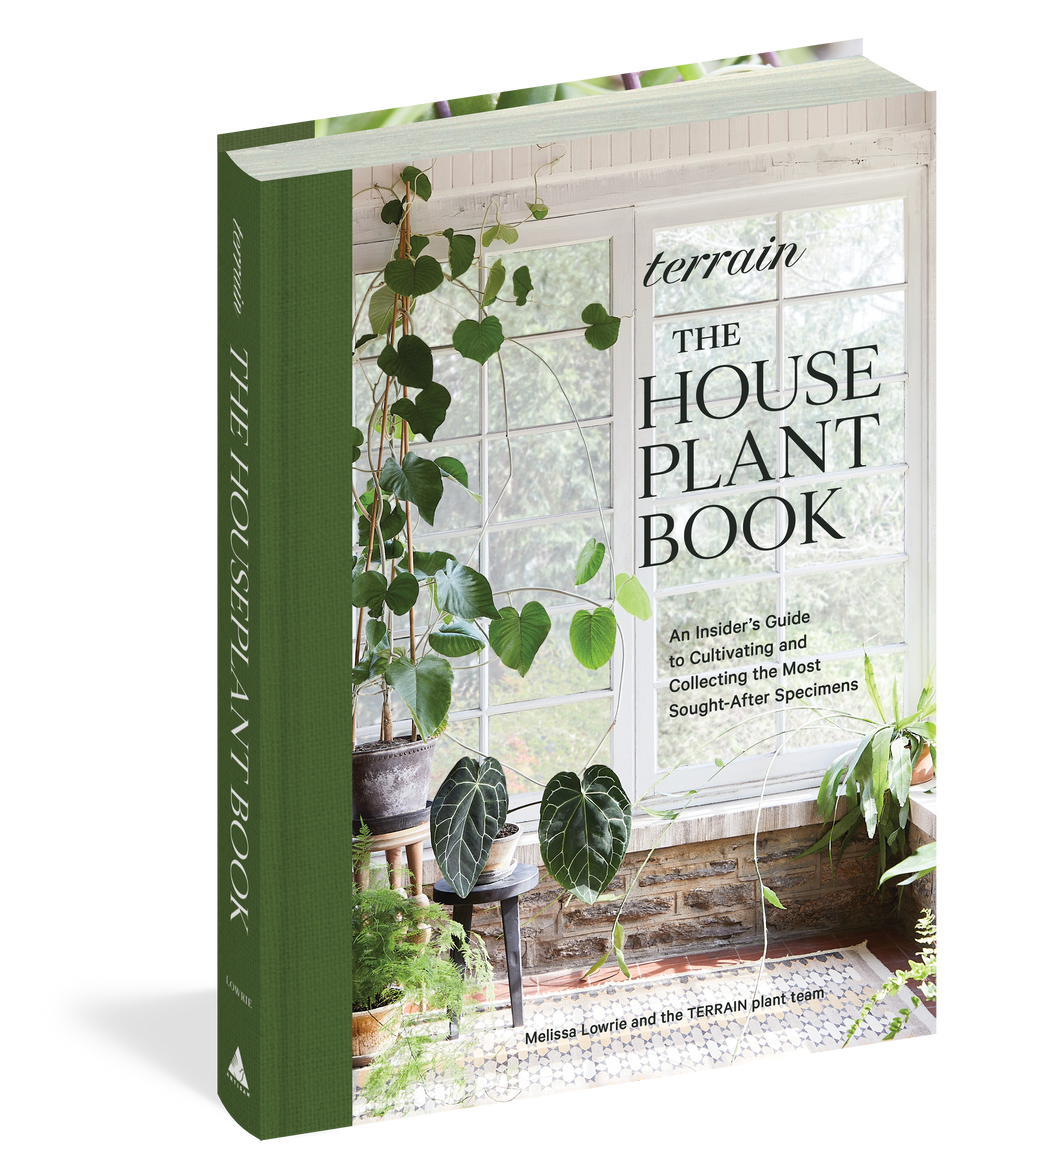 Terrain: The House Plant Book